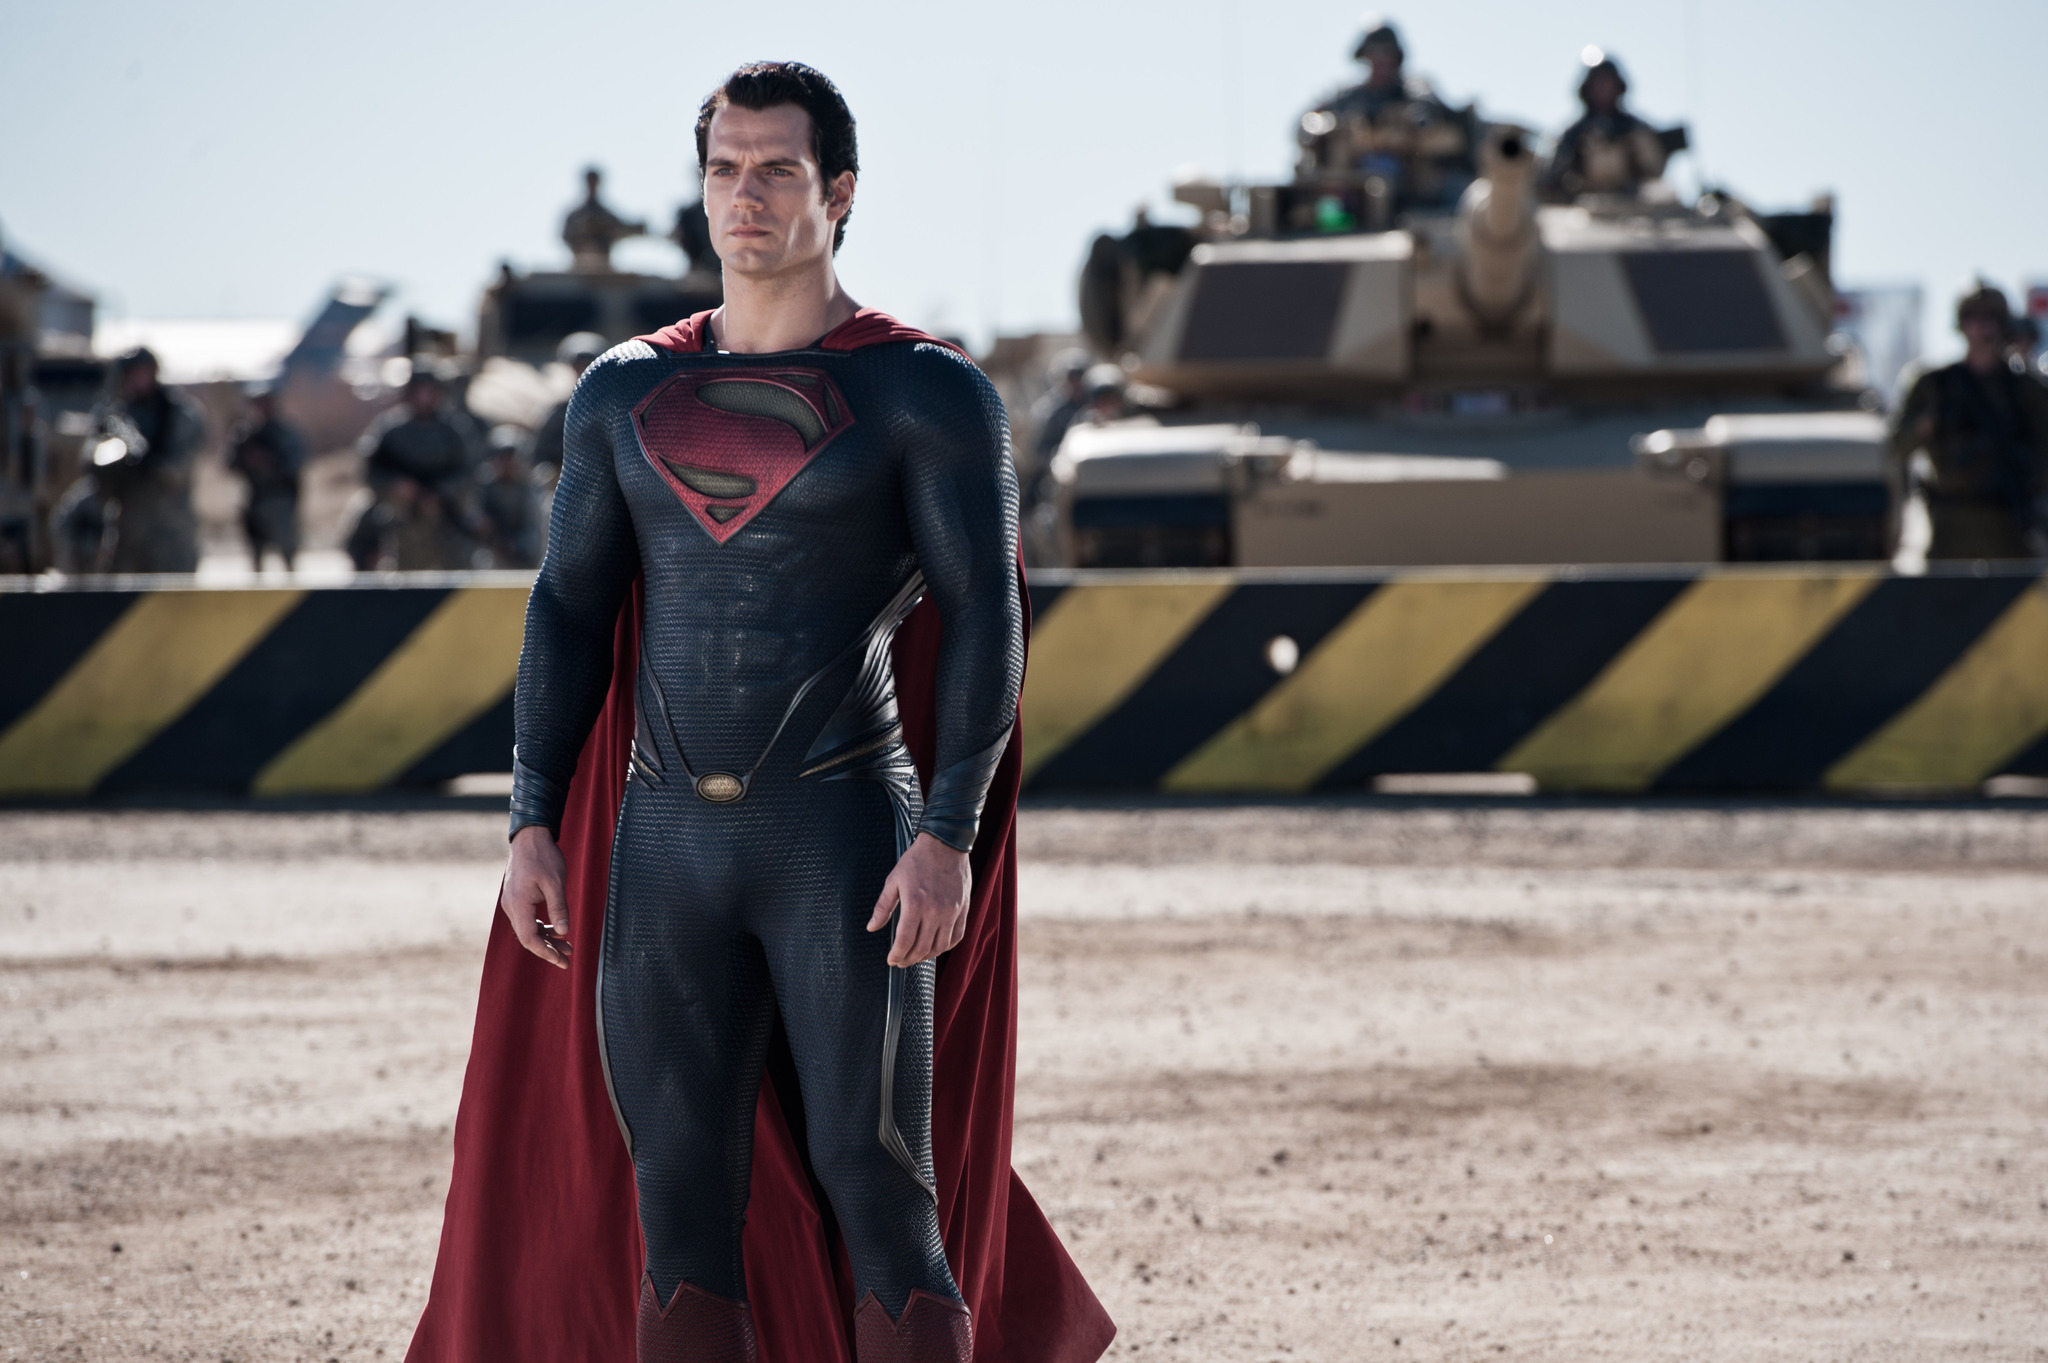 Henry Cavill as Superman in Man of Steel (2013)